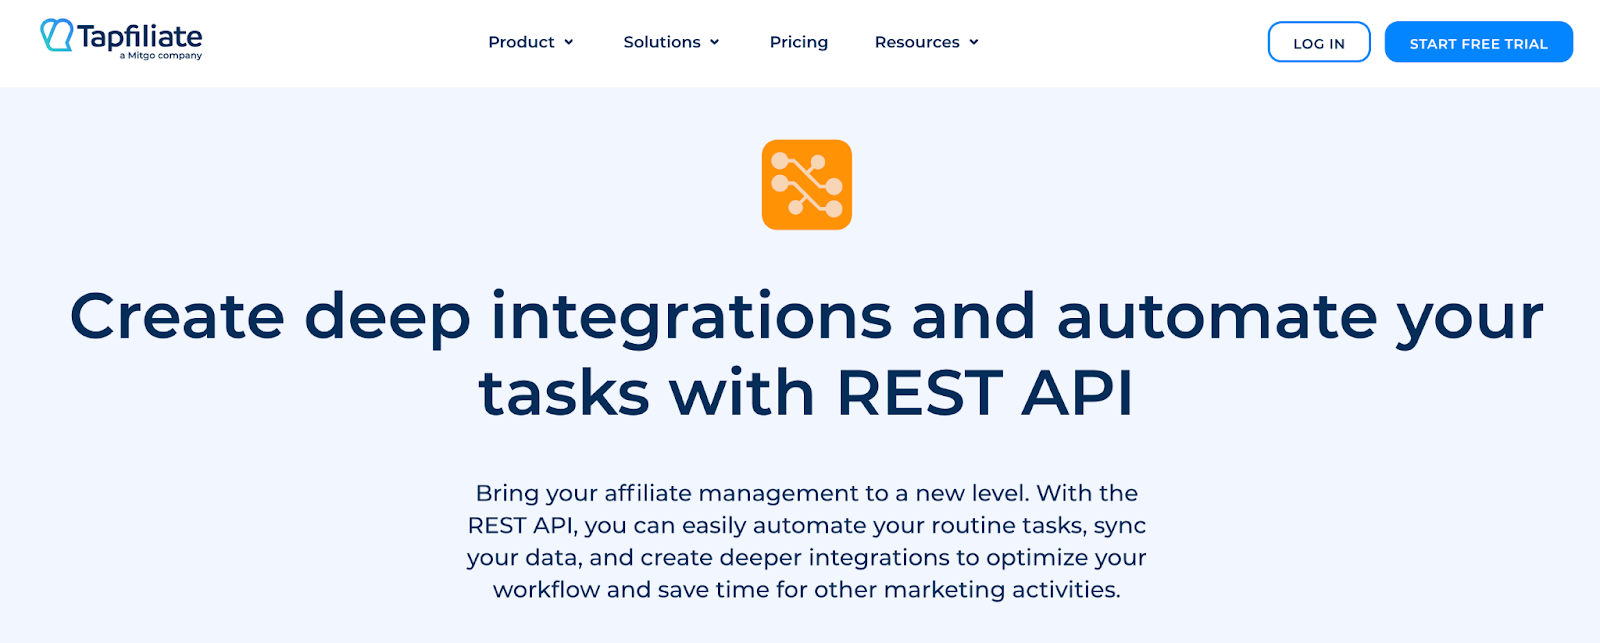 Tapfiliate REST API affiliate tracking platform landing page